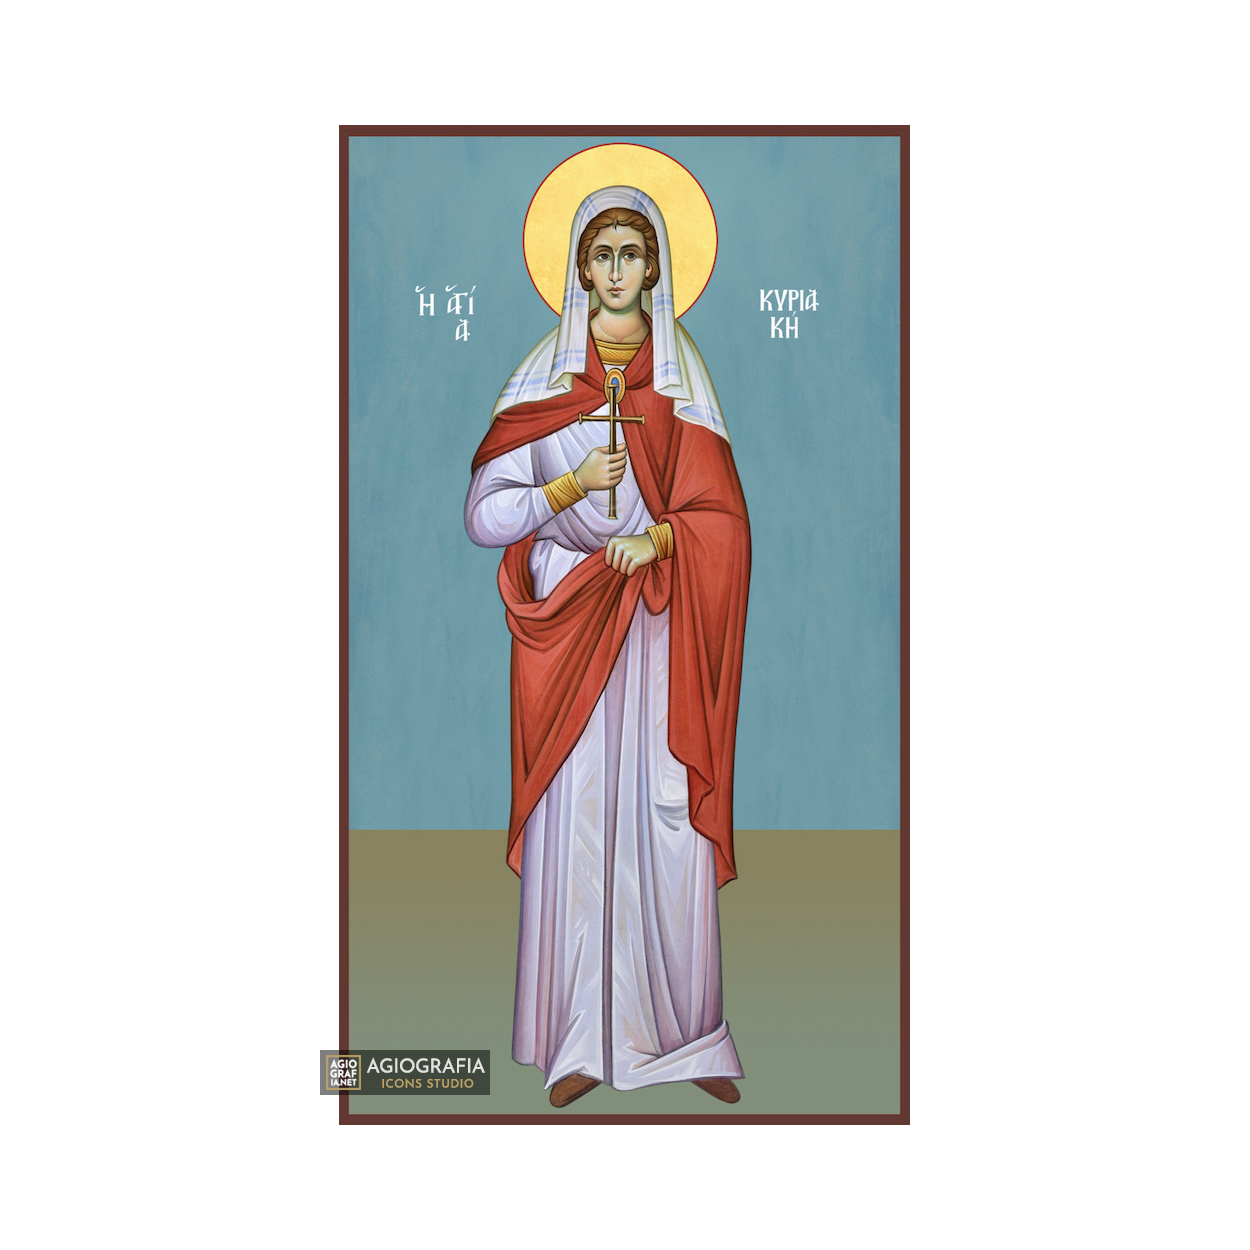 St Kiriaki Christian Orthodox Icon on Wood with Blue Background